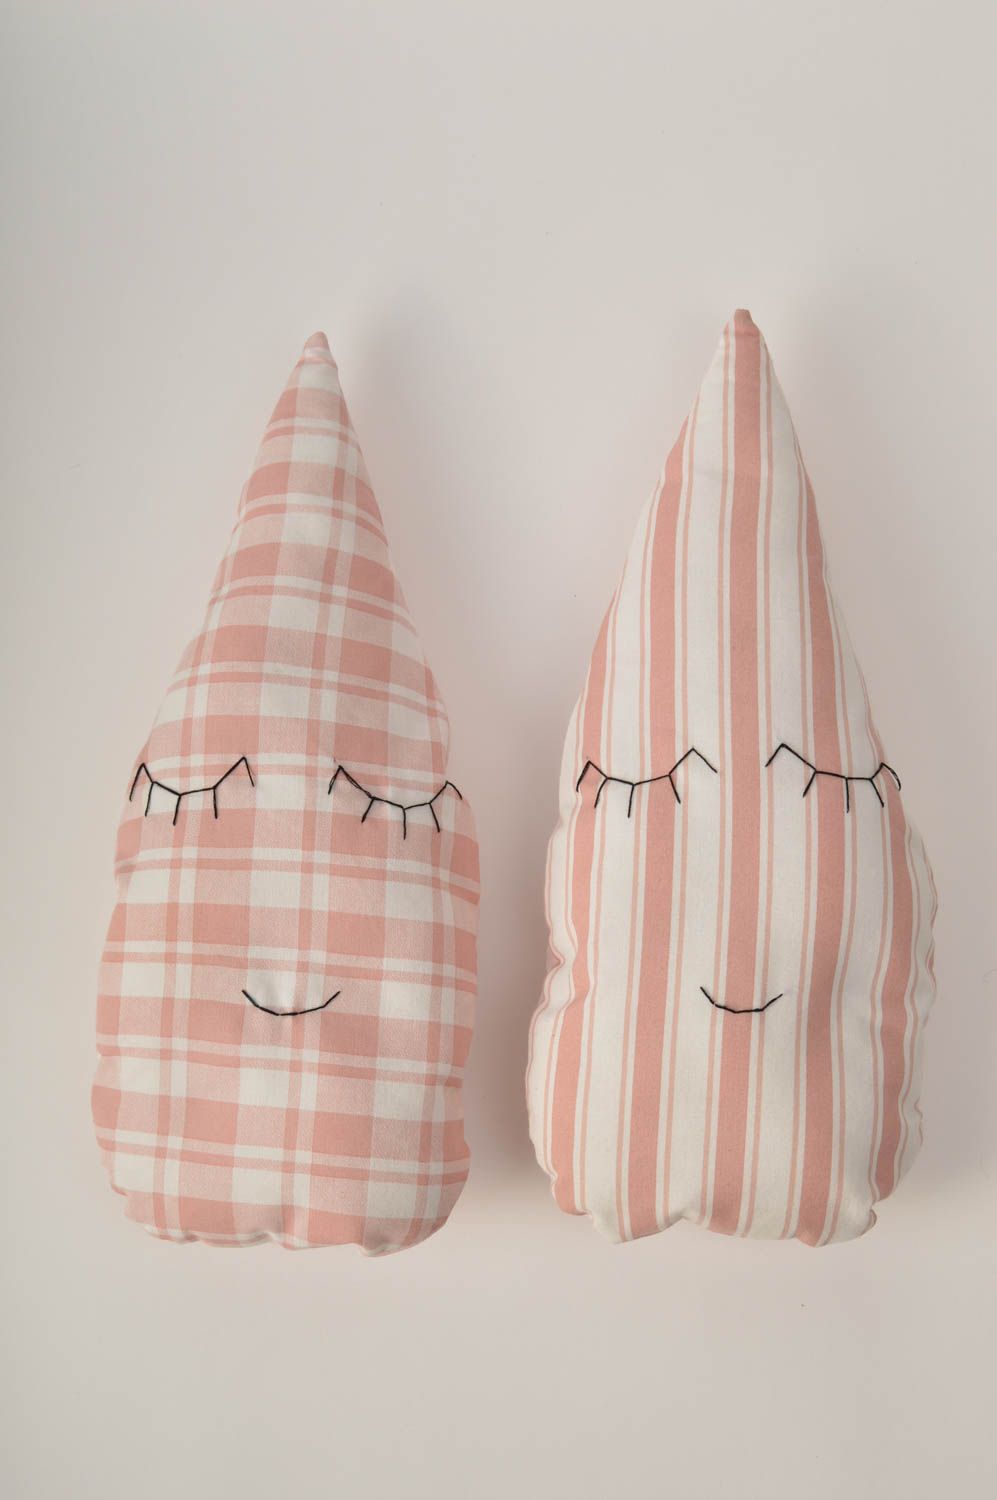 Handmade home decor decorative pillows accent pillows housewarming gift ideas photo 1